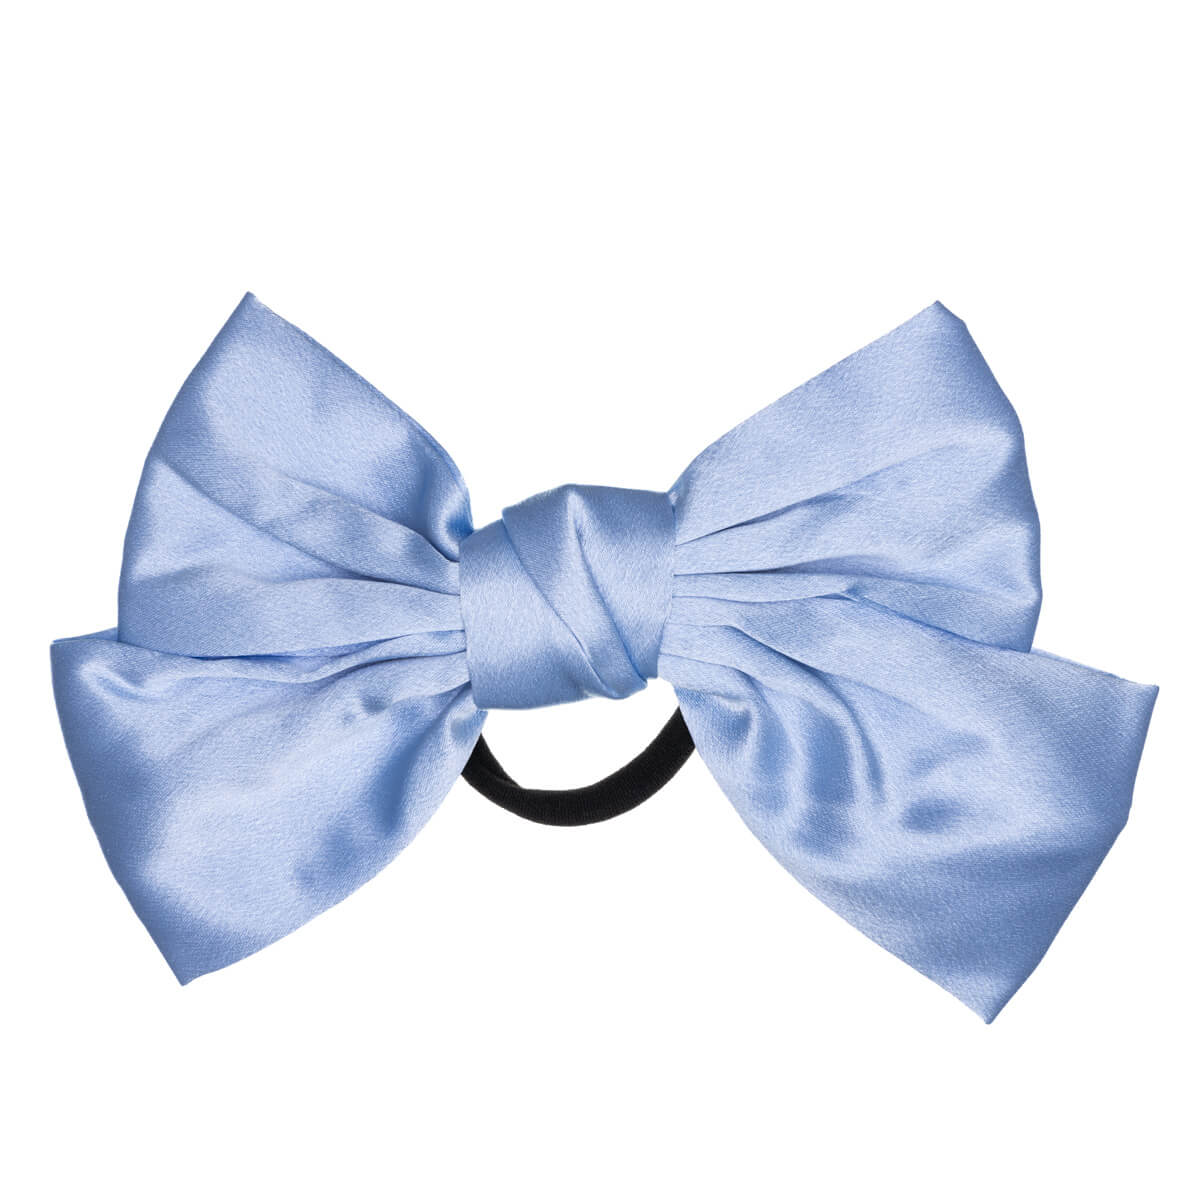 Monochrome satin hair bow tie hair bow 21cm